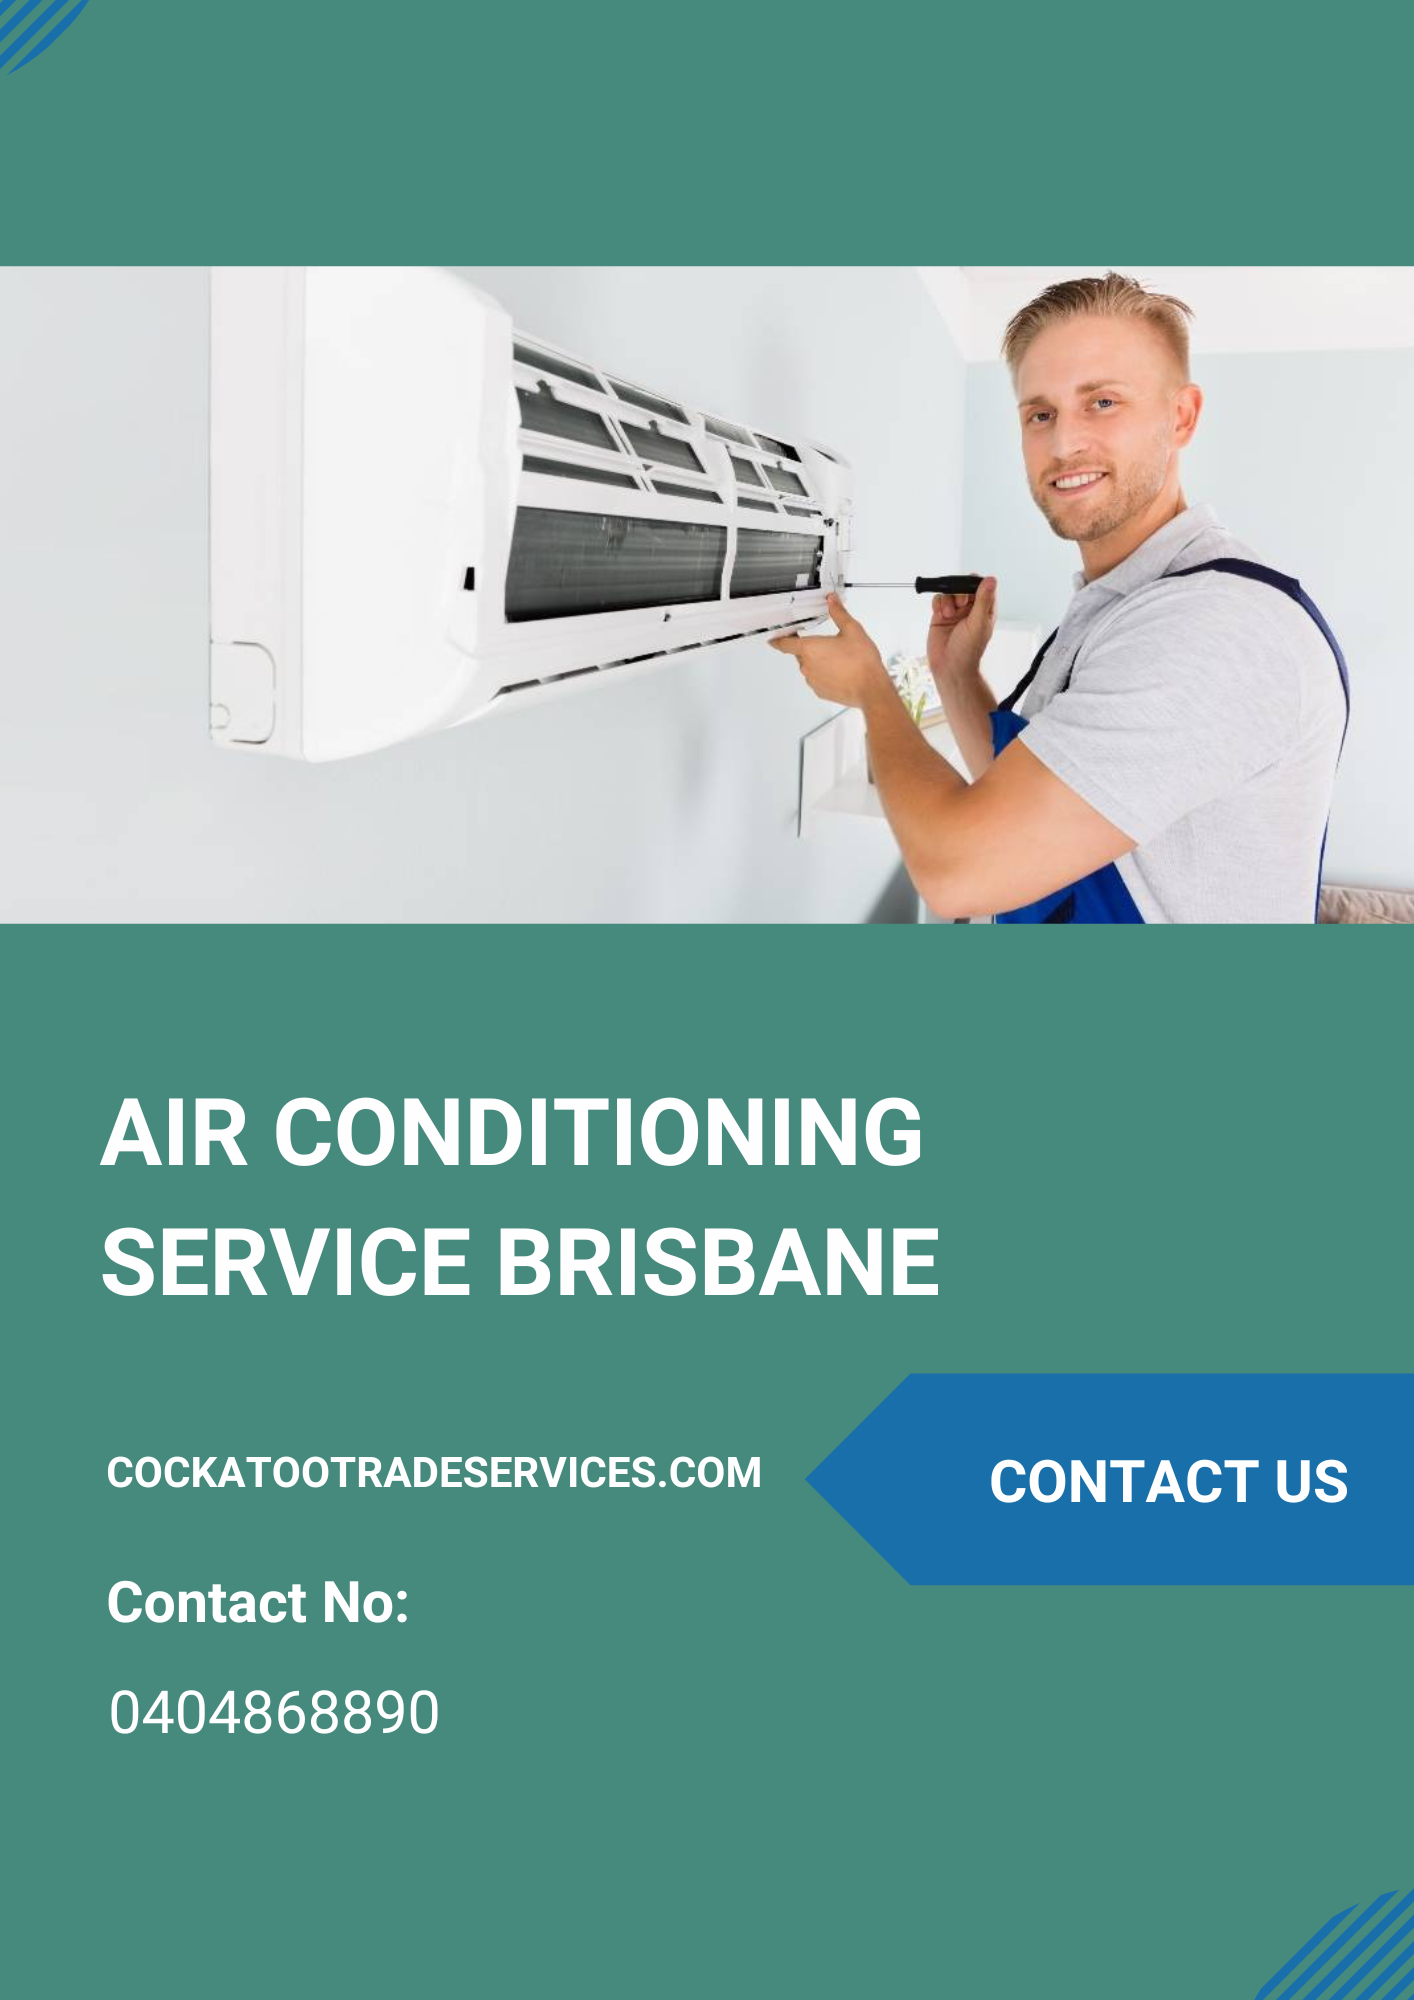 Air Conditioning Service Brisbane